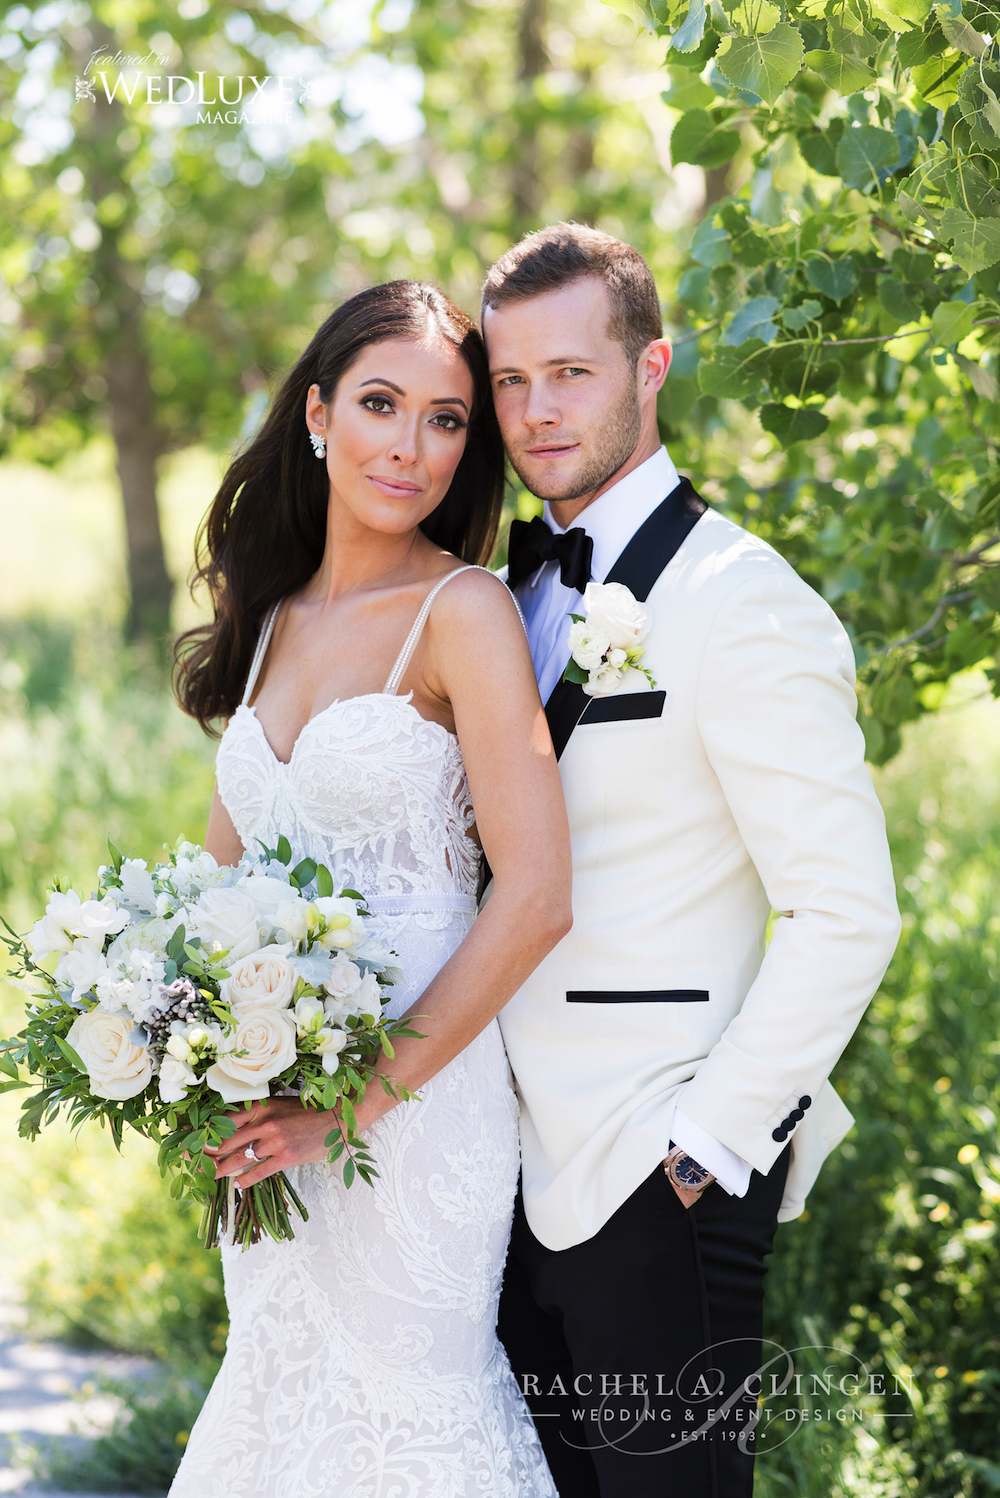 NHL Player Nazem Kadri Marries Beautiful Ashley At Casa Loma - Rachel A.  Clingen Wedding & Event Design